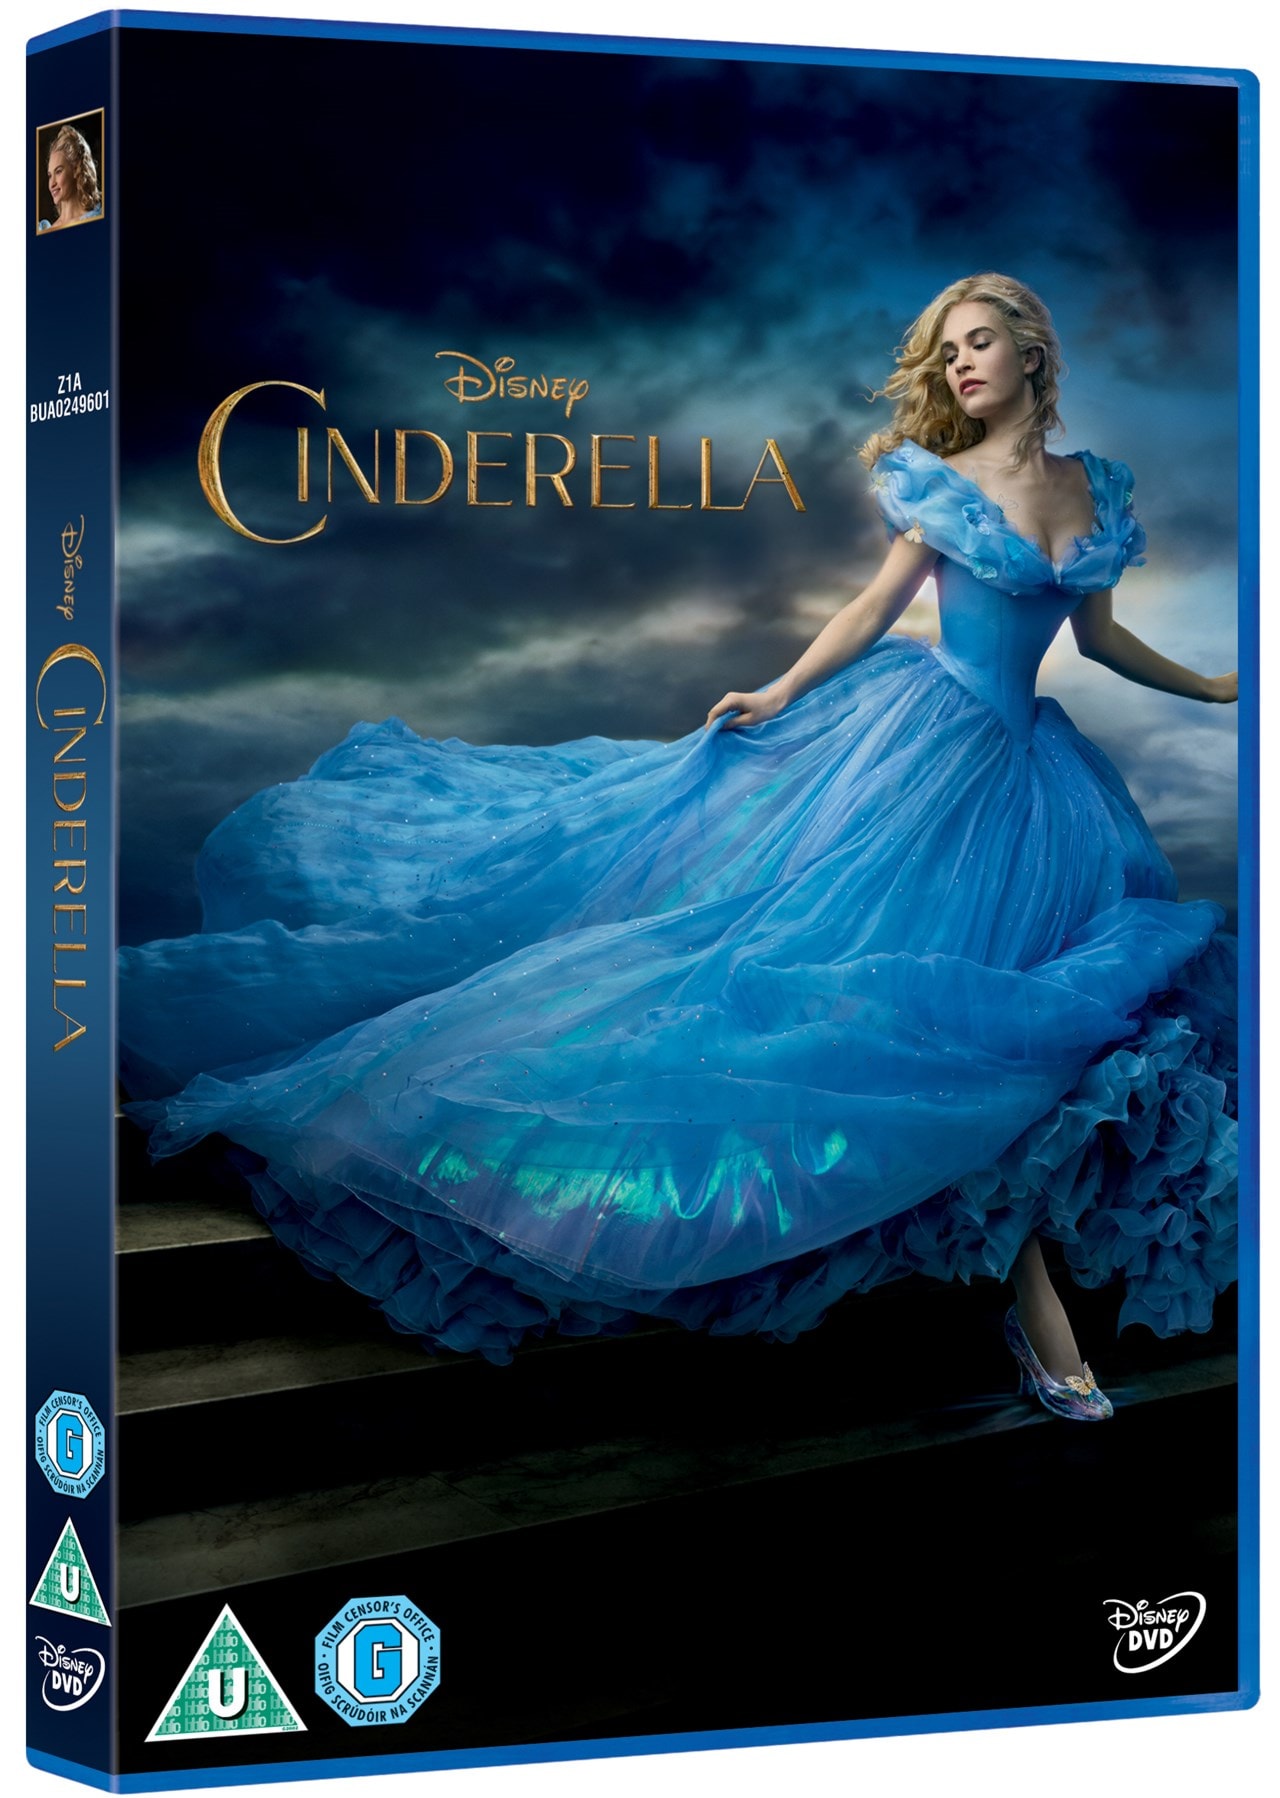 Cinderella Dvd Free Shipping Over Hmv Store